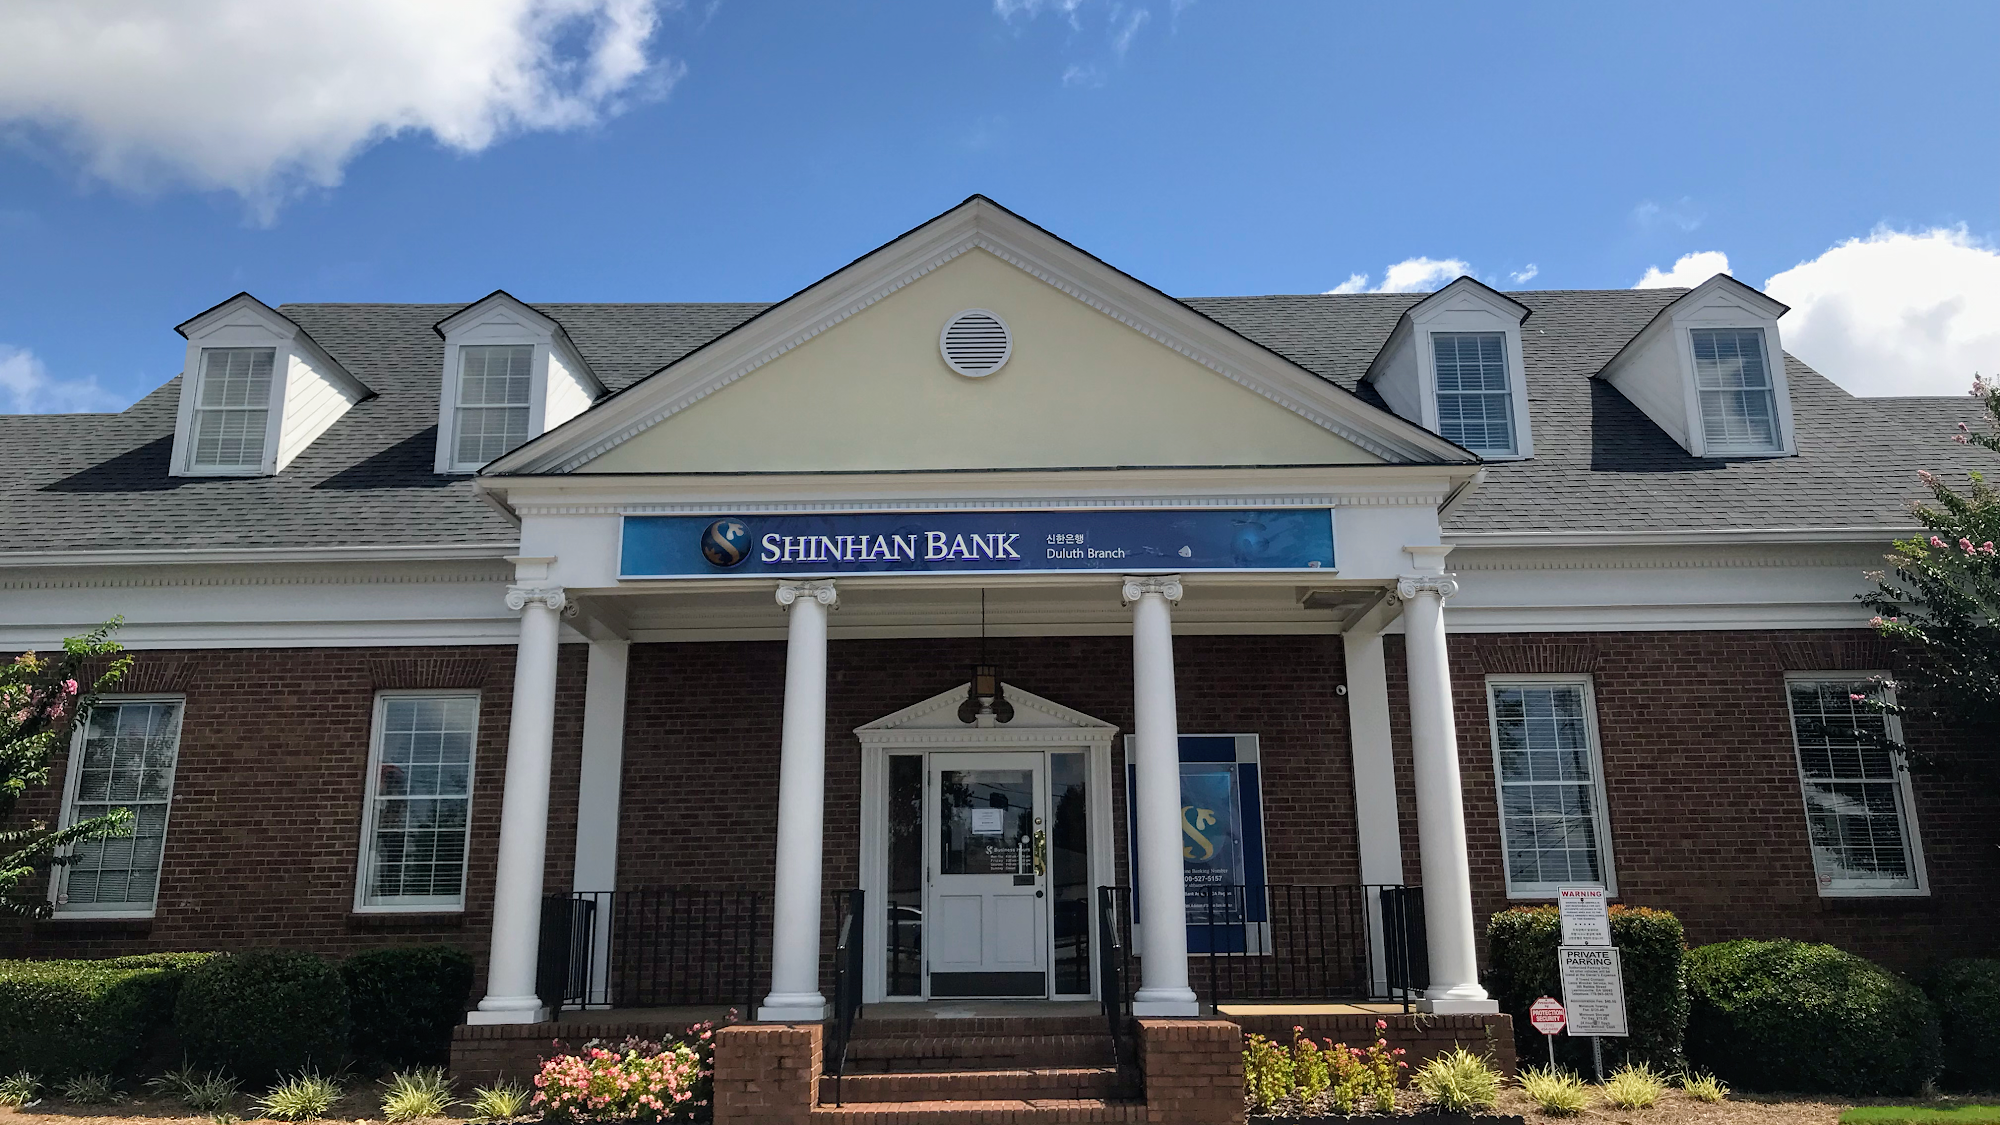 Shinhan Bank America - Duluth branch 신한은행